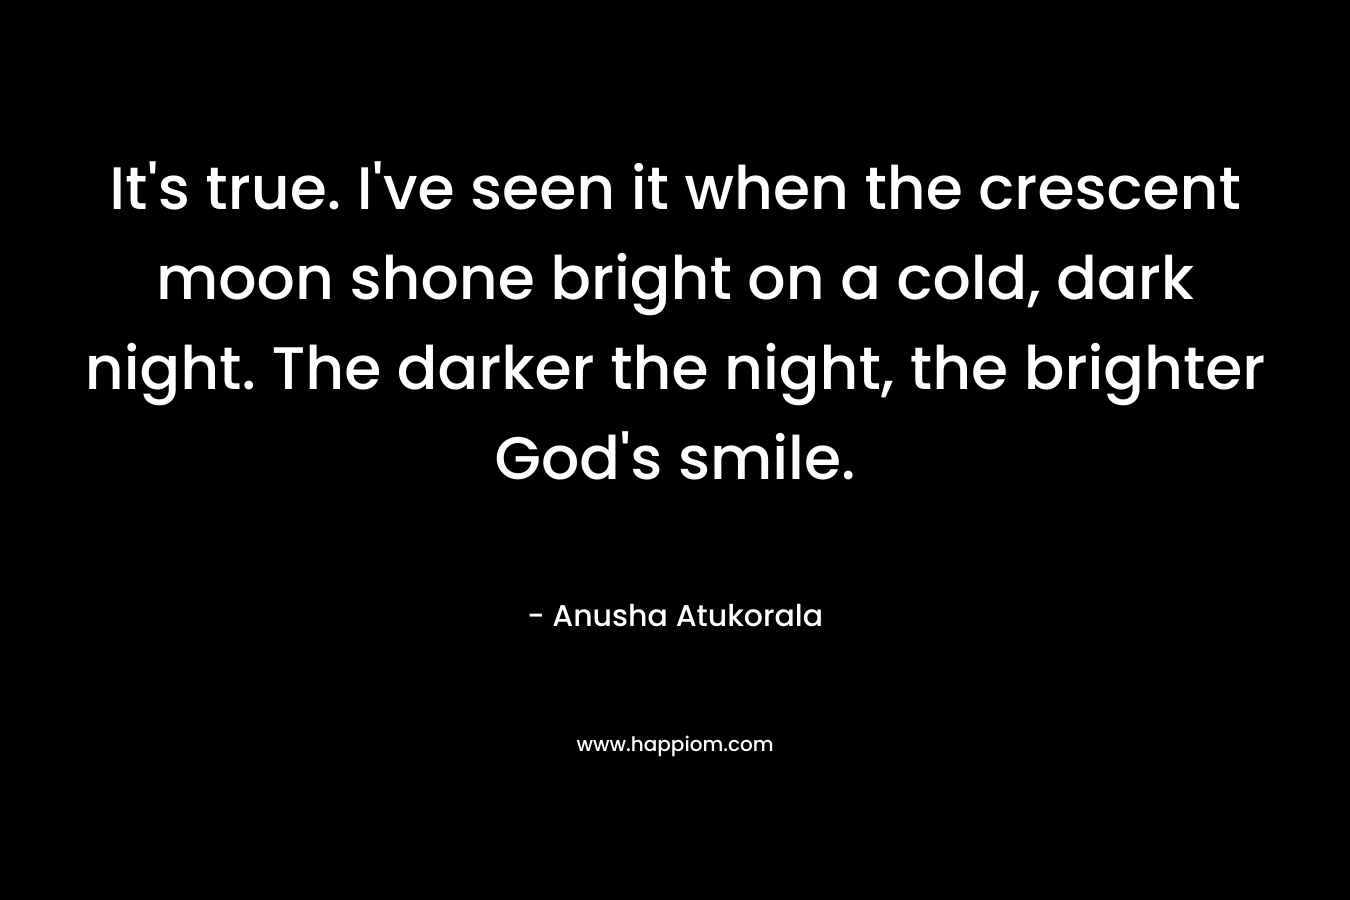 It’s true. I’ve seen it when the crescent moon shone bright on a cold, dark night. The darker the night, the brighter God’s smile. – Anusha Atukorala